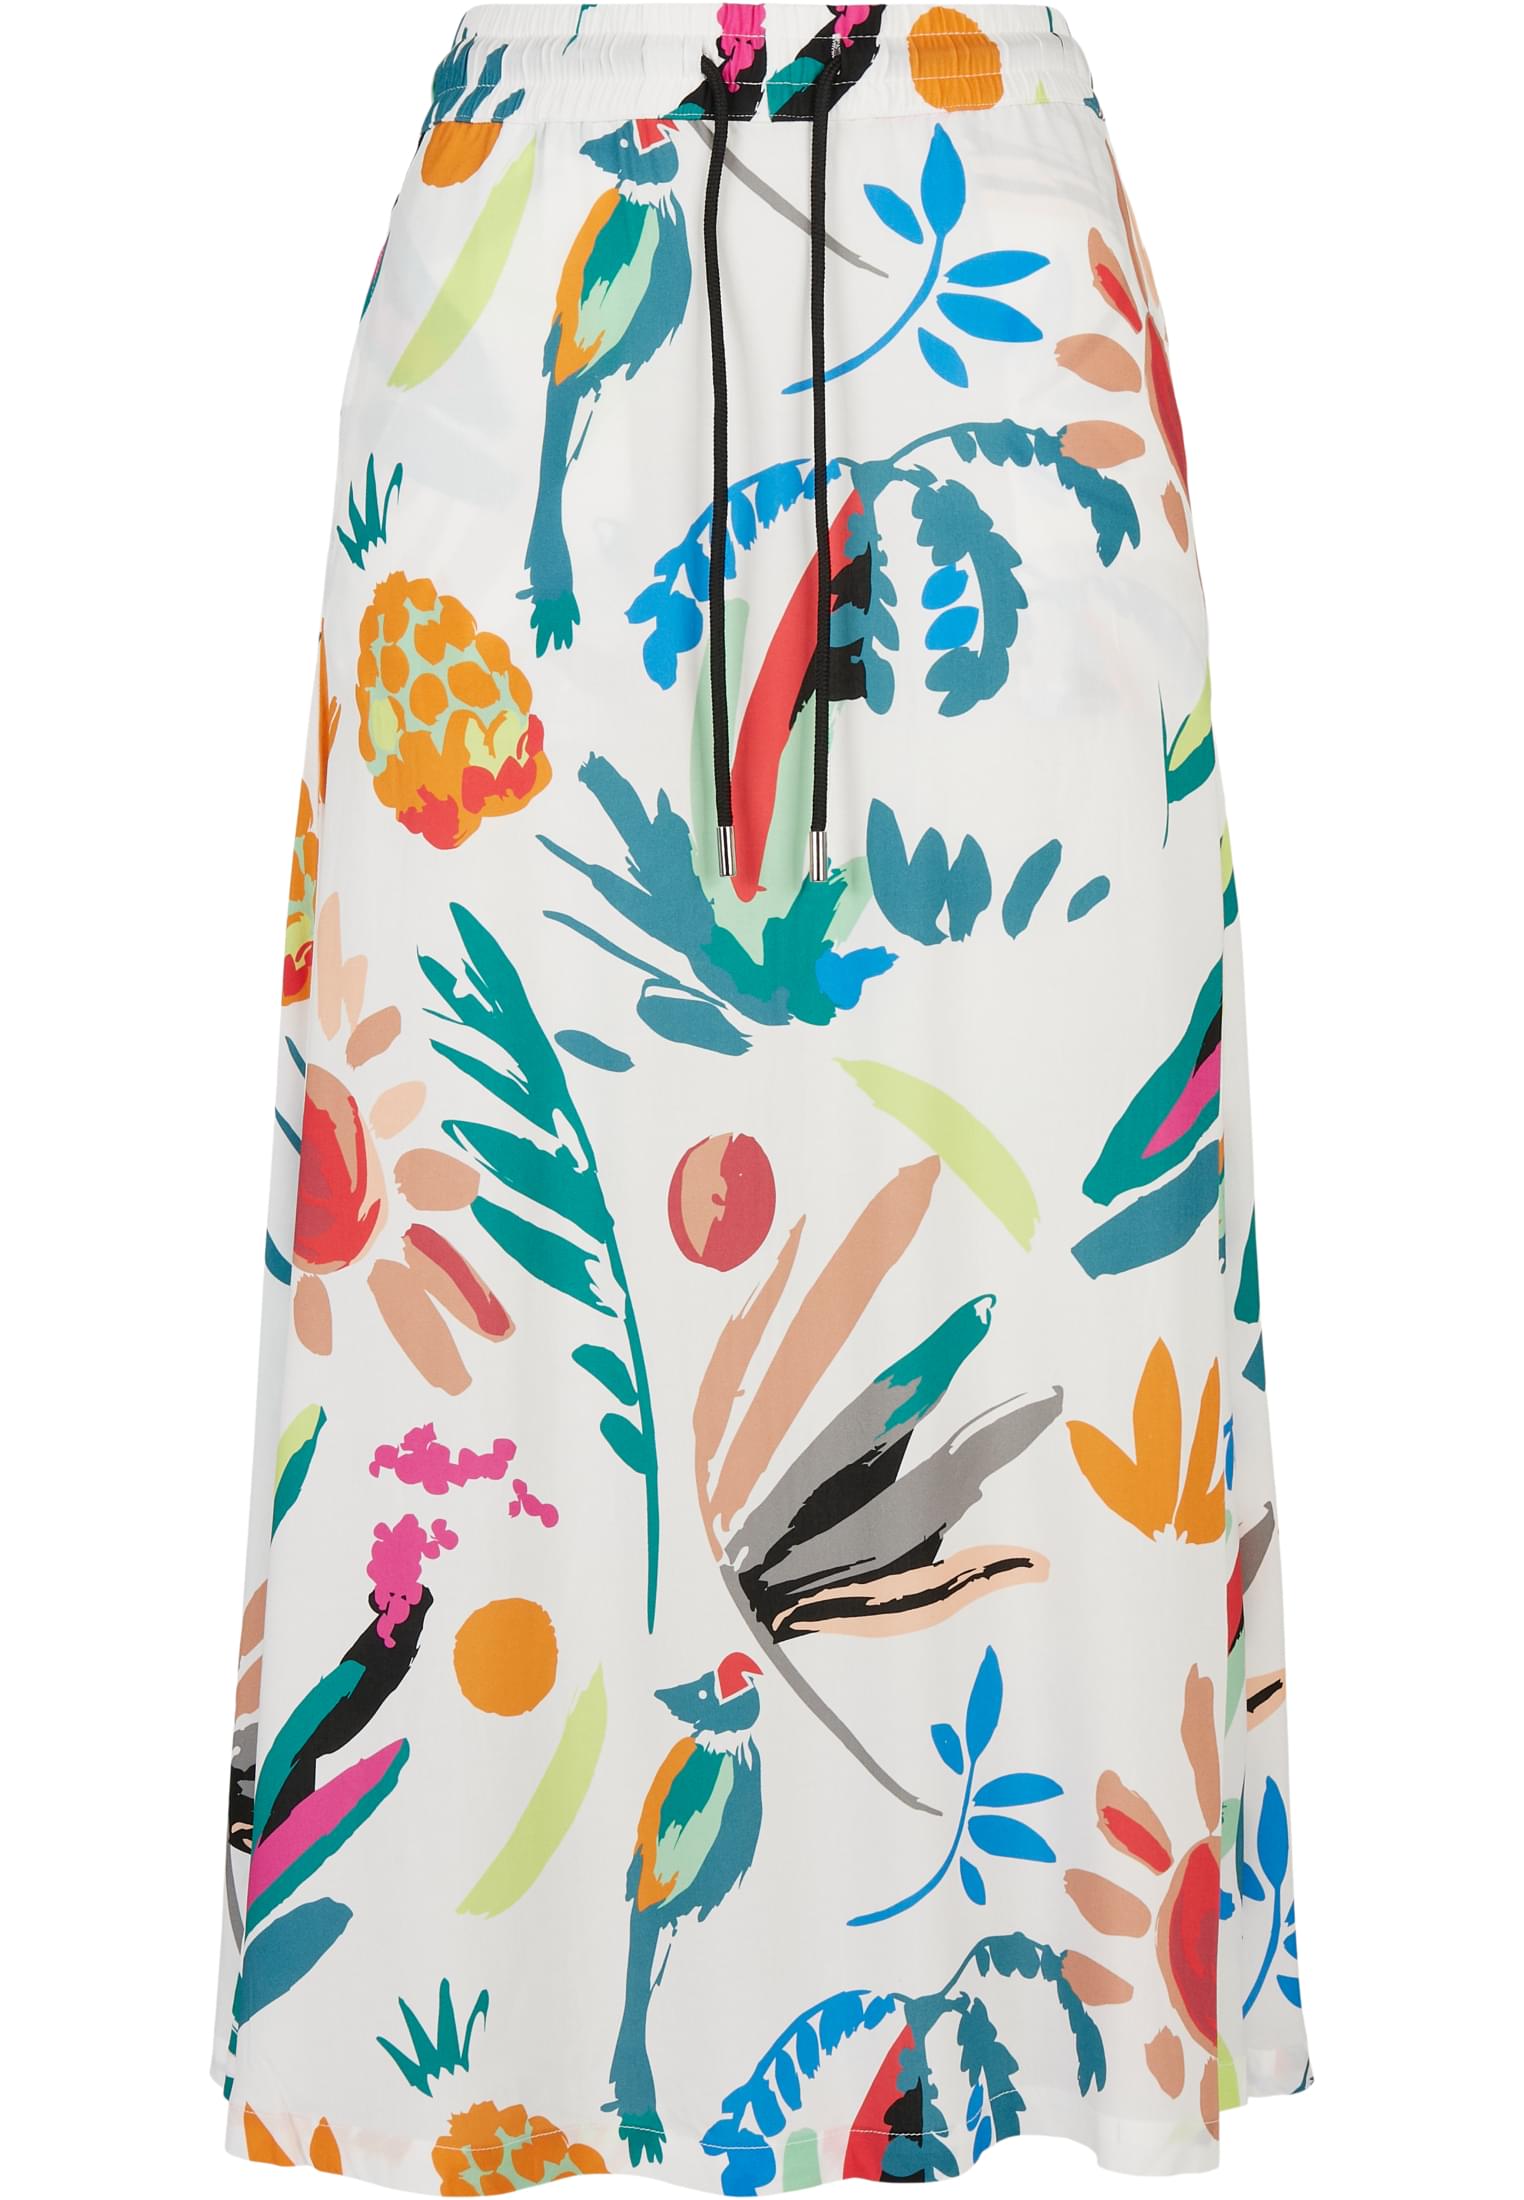 Frauen Ladies Viscose Midi Skirt in Farbe whitesandfruity